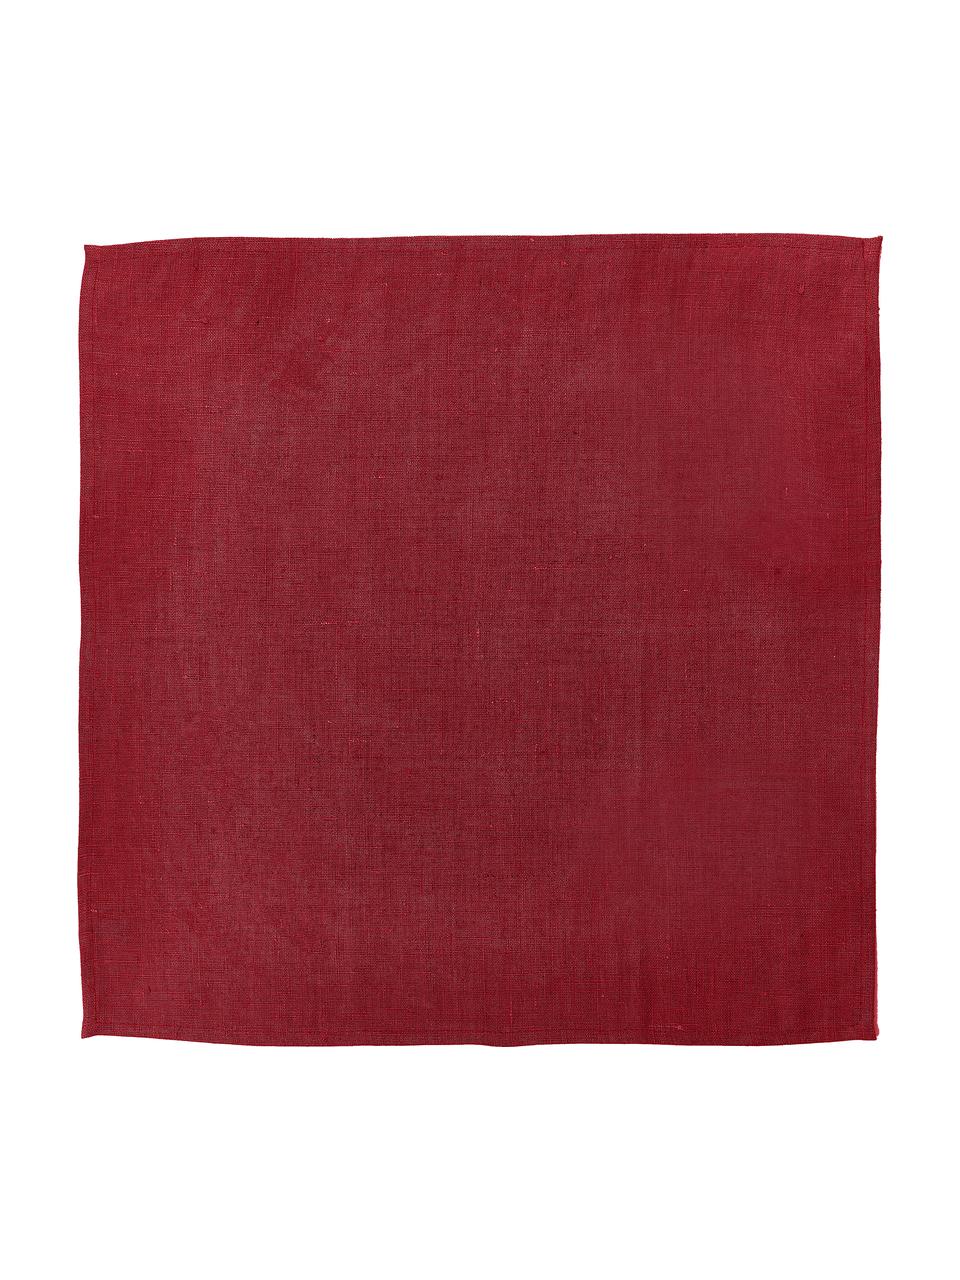 Tovagliolo in lino rosso Heddie 2 pz, 100% lino, Rosso, Larg. 45 x Lung. 45 cm